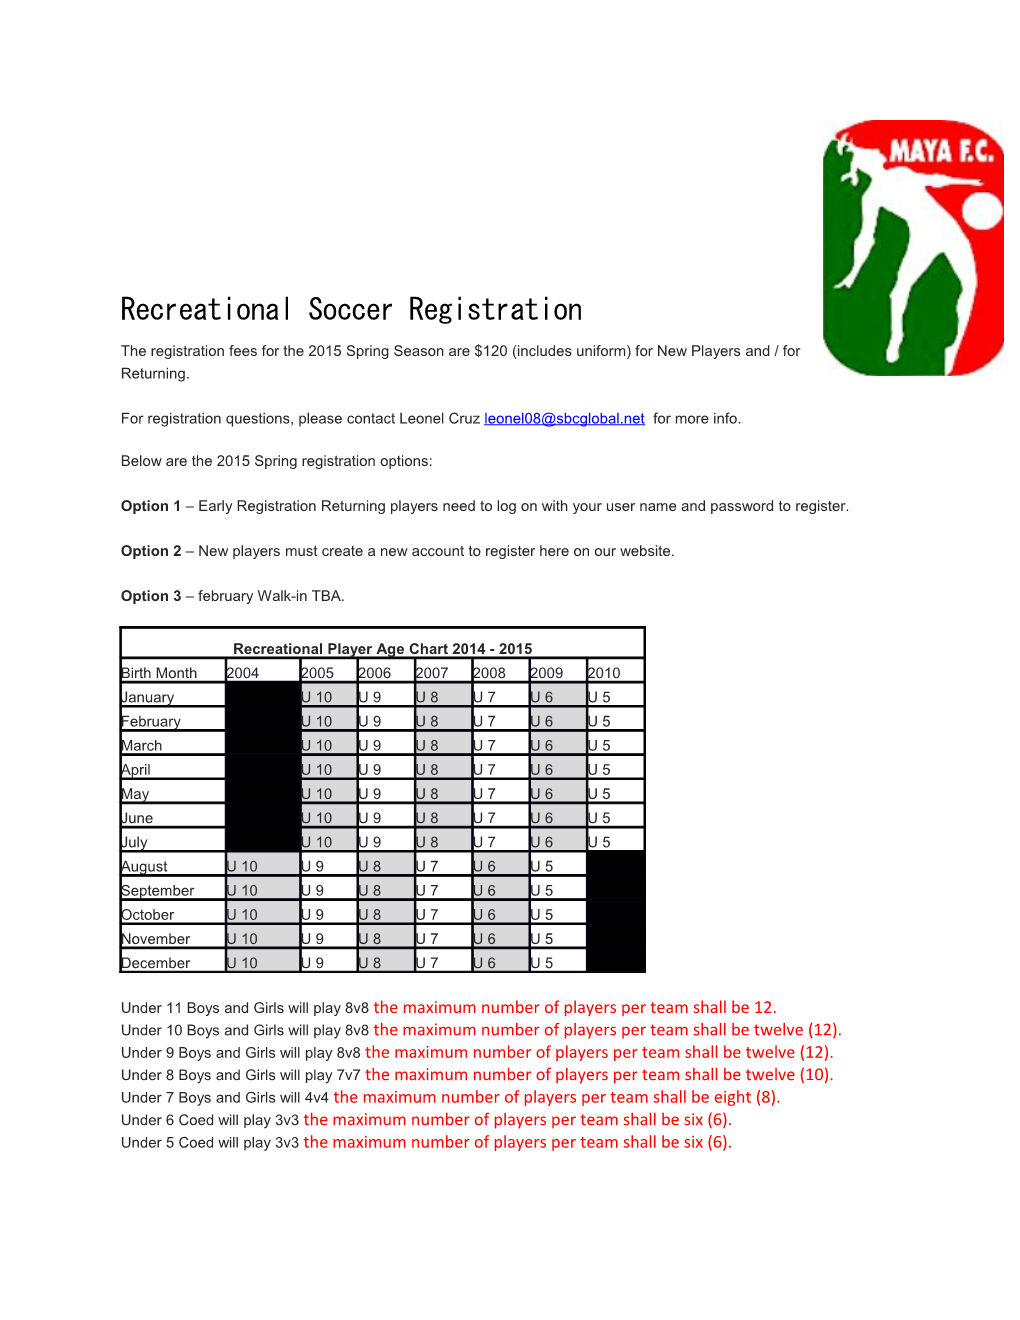 Recreational Soccer Registration